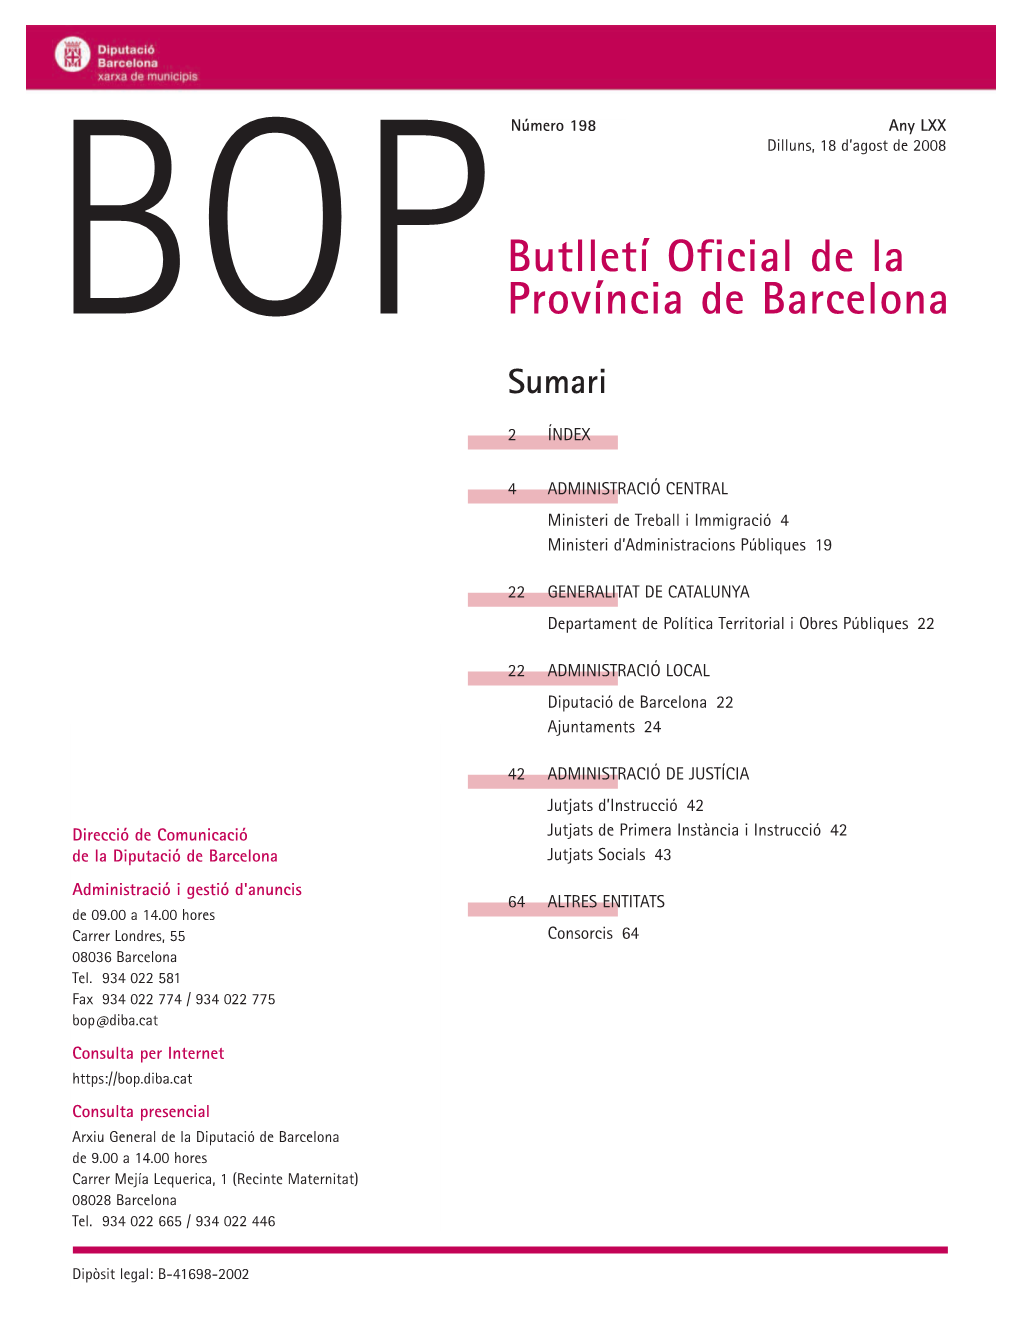 Butlletí Oficial De La Província De Barcelona 18 / 8 / 2008